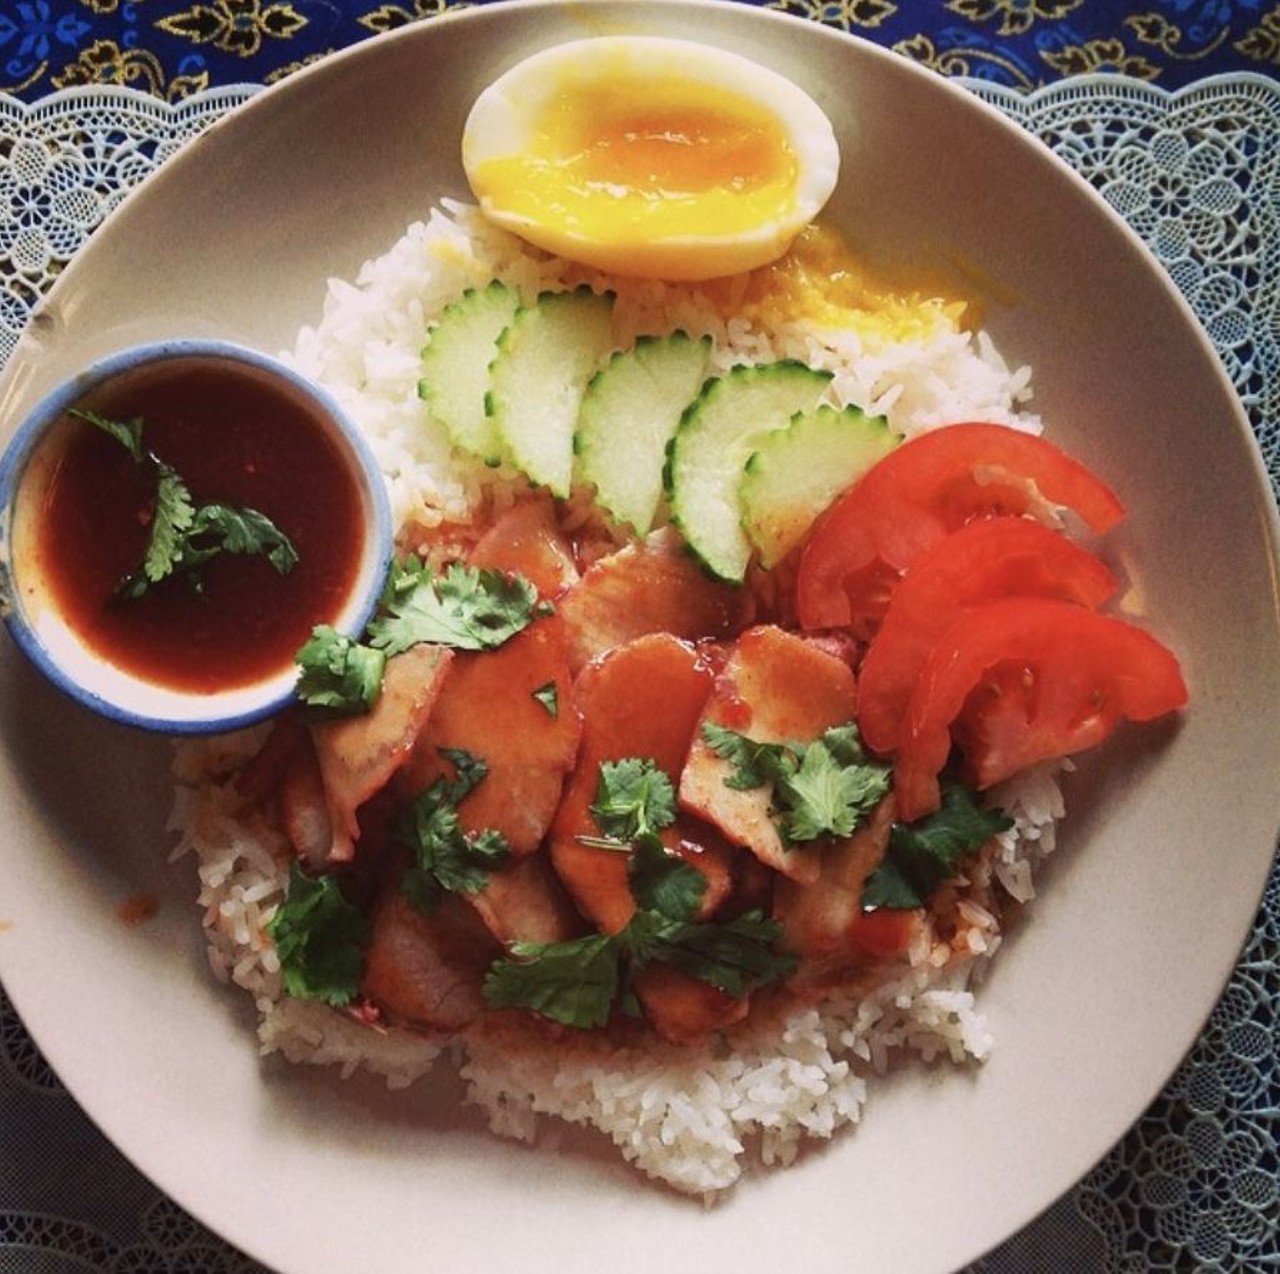  Thai Kitchen
12210 Madison Ave., 216-226-4450
This cozy Lakewood location serves up authentic and always freshly prepared Thai cuisine.
Photo via  thaikitchenlakewood/Instagram